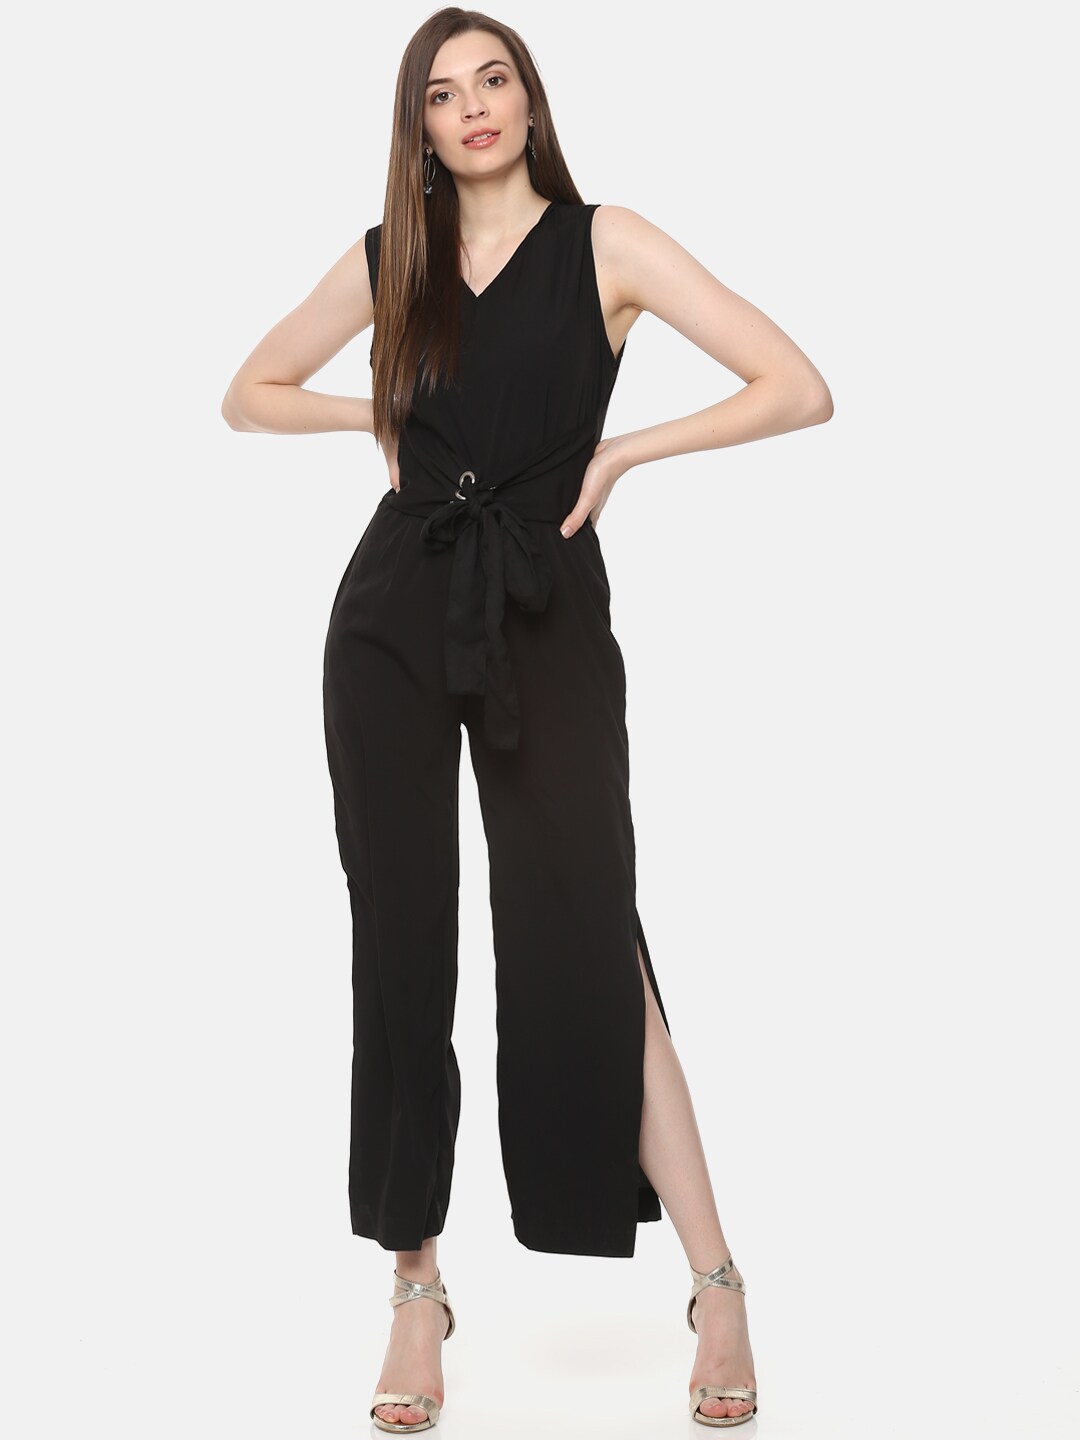 Belle Fille Black Solid Basic Jumpsuit Price in India